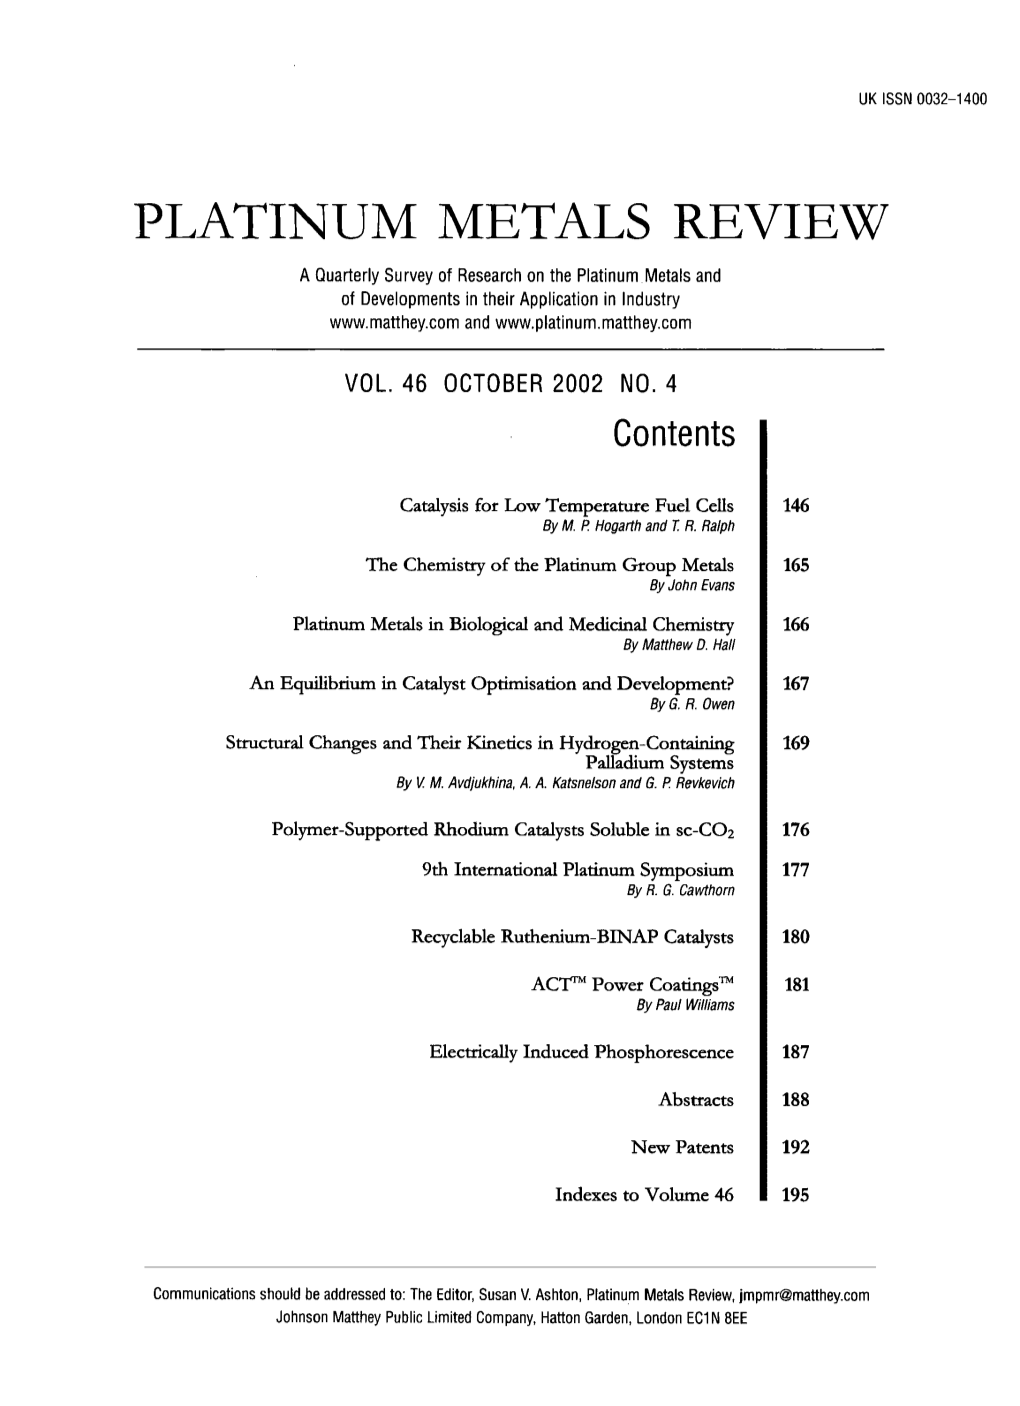 Platinum Metals Review